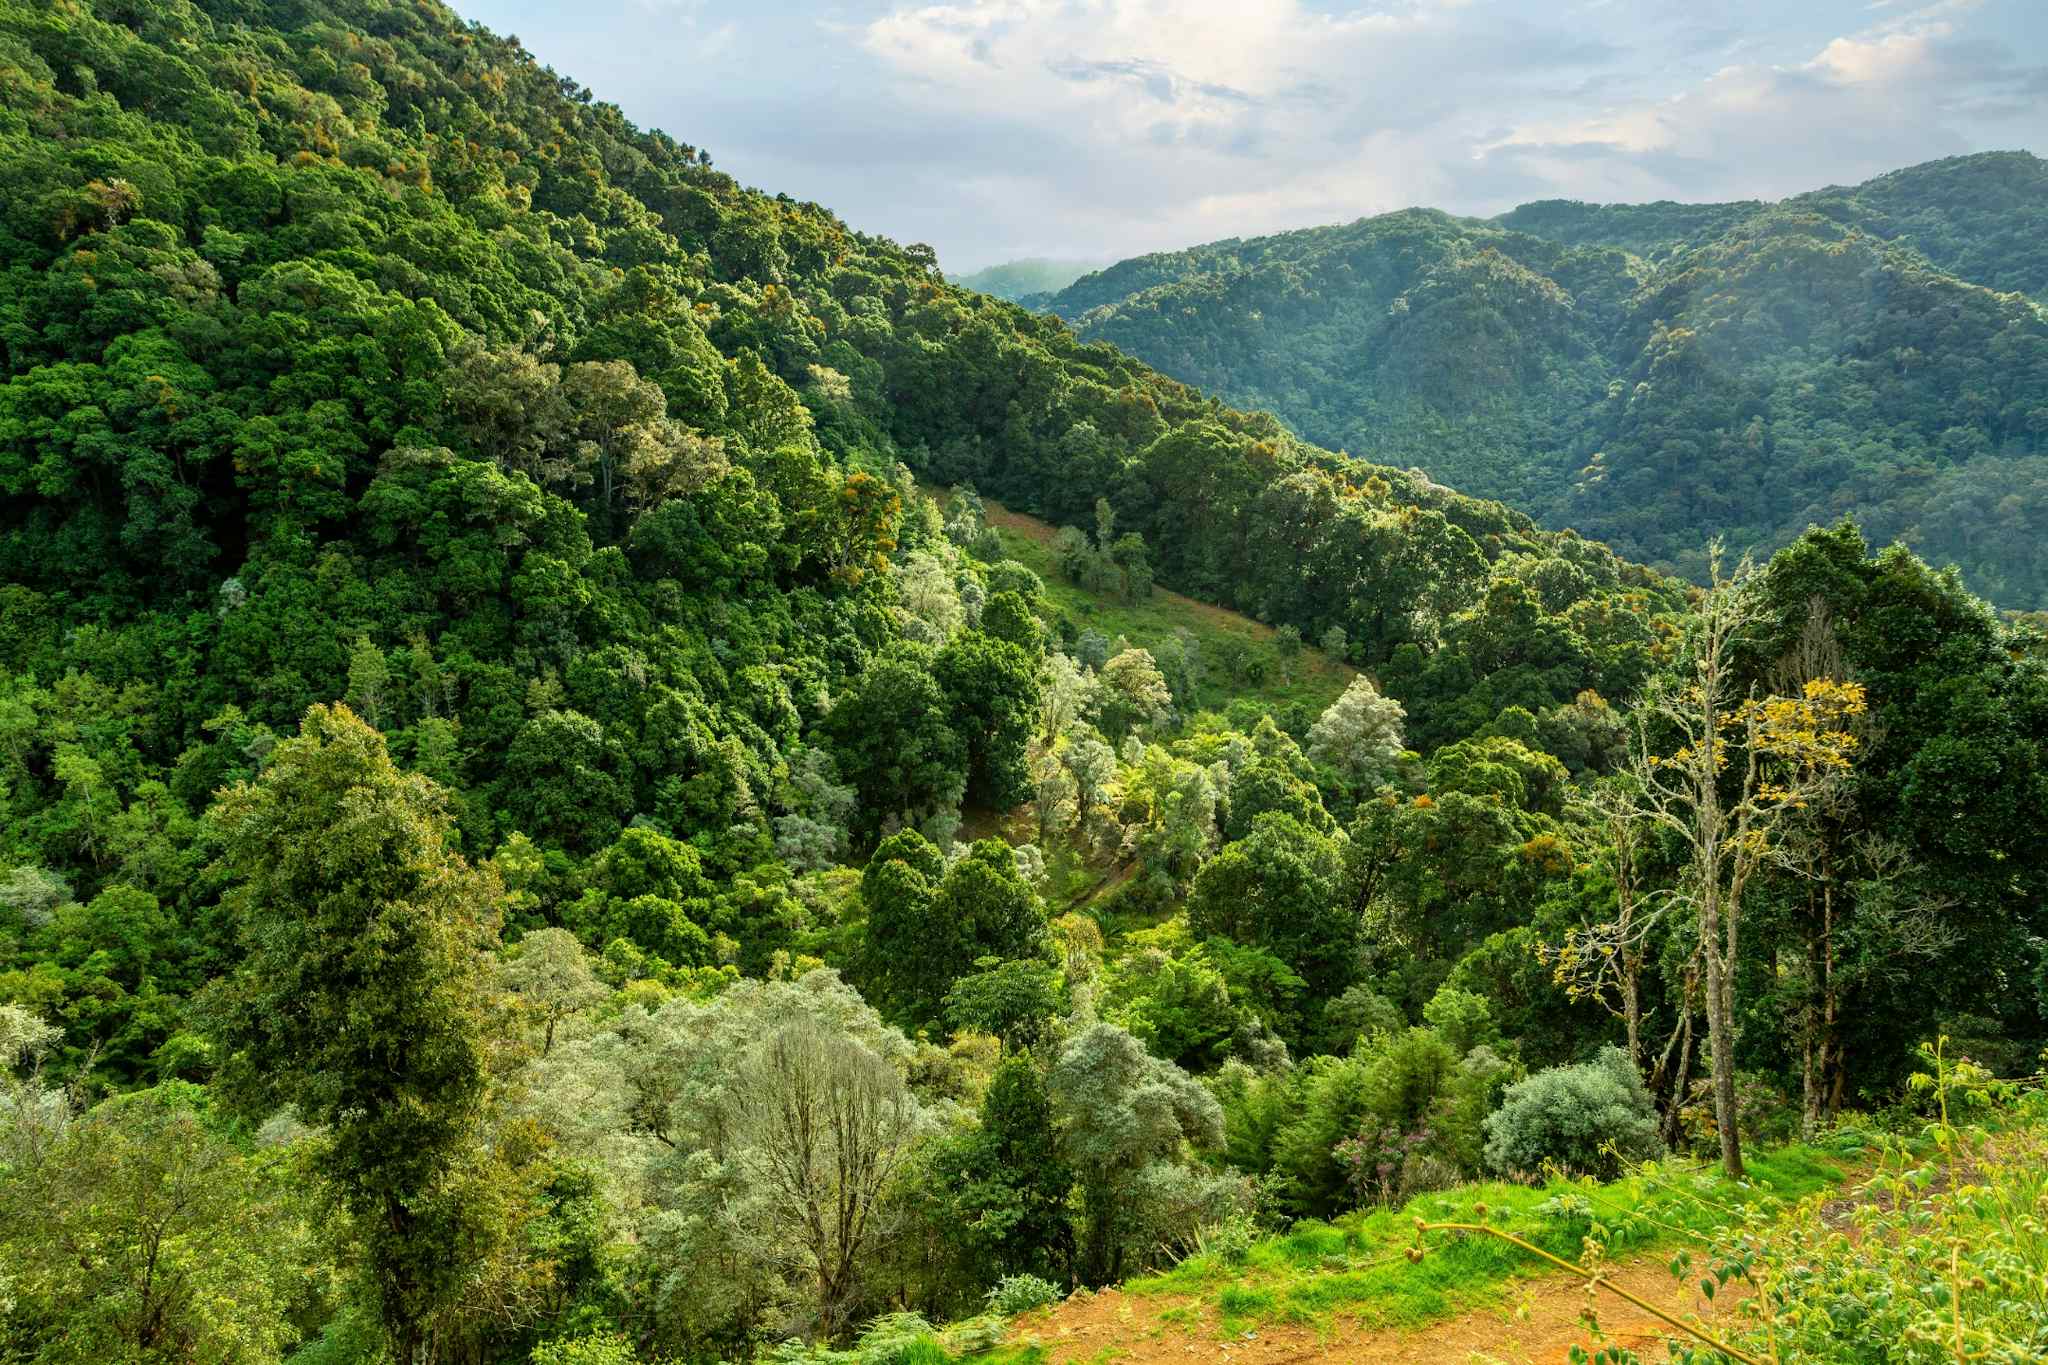 Green, forest hills in San Gerardo de Dota, Costa Rica.